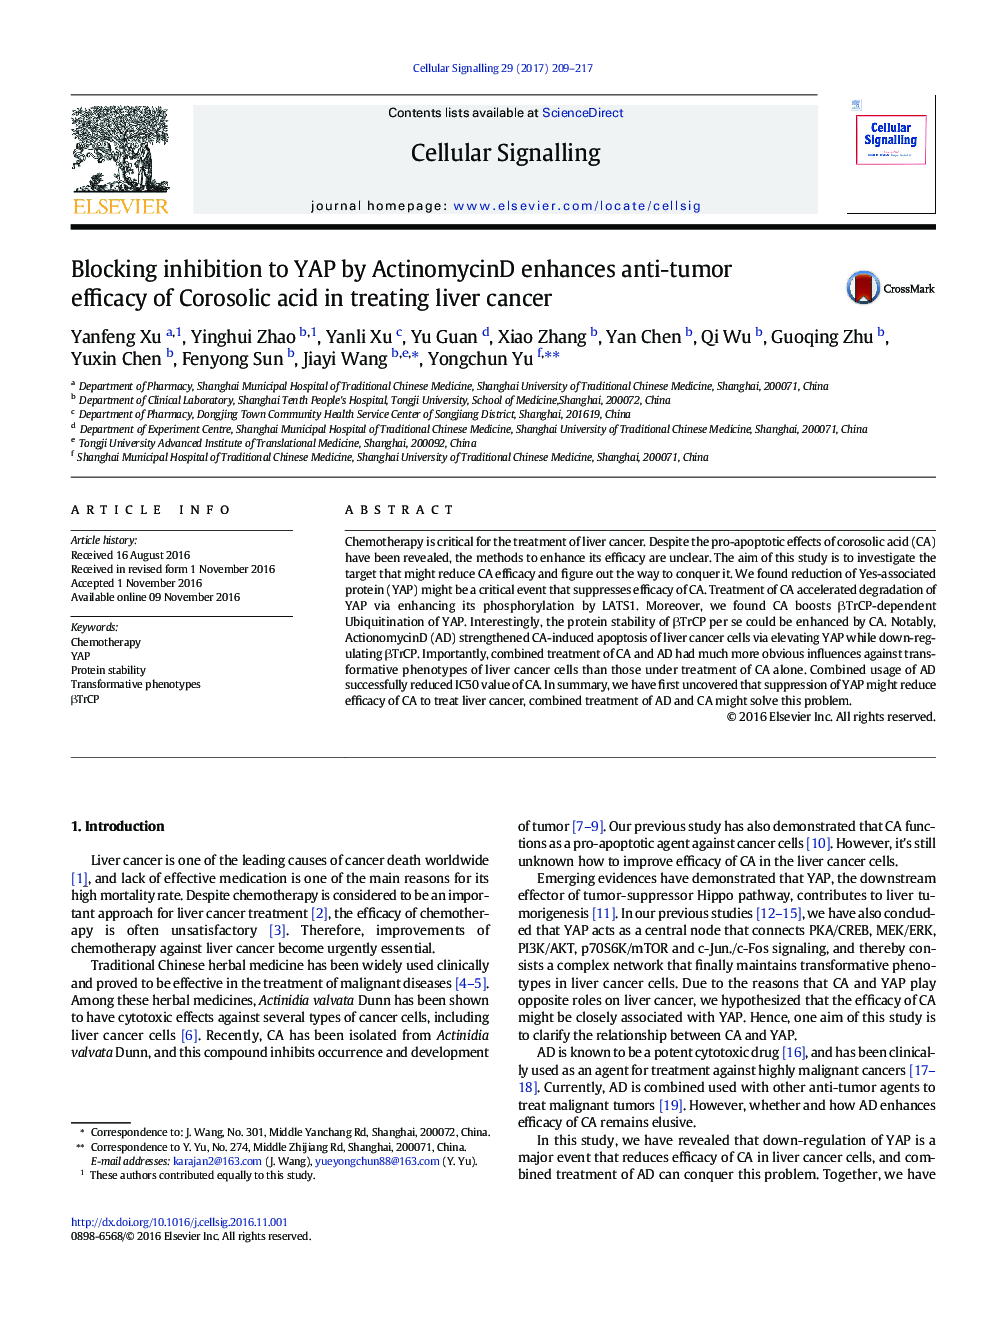 Blocking inhibition to YAP by ActinomycinD enhances anti-tumor efficacy of Corosolic acid in treating liver cancer